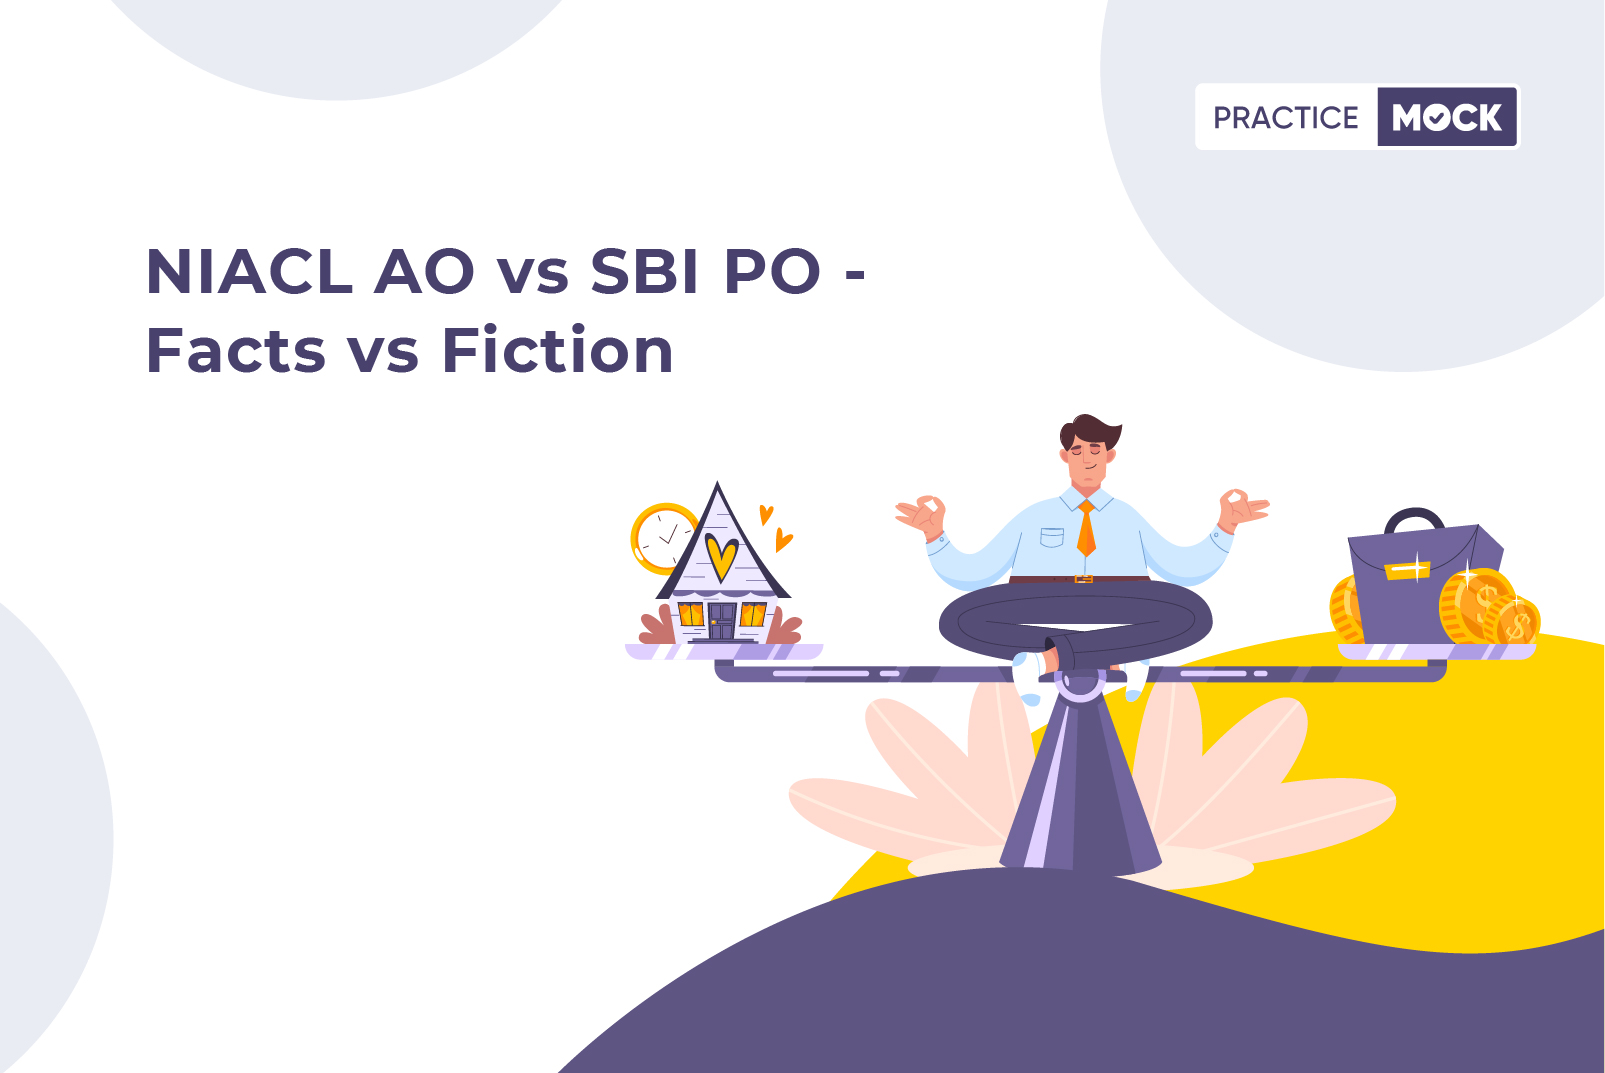 NIACL AO vs SBI PO - Facts vs Fiction